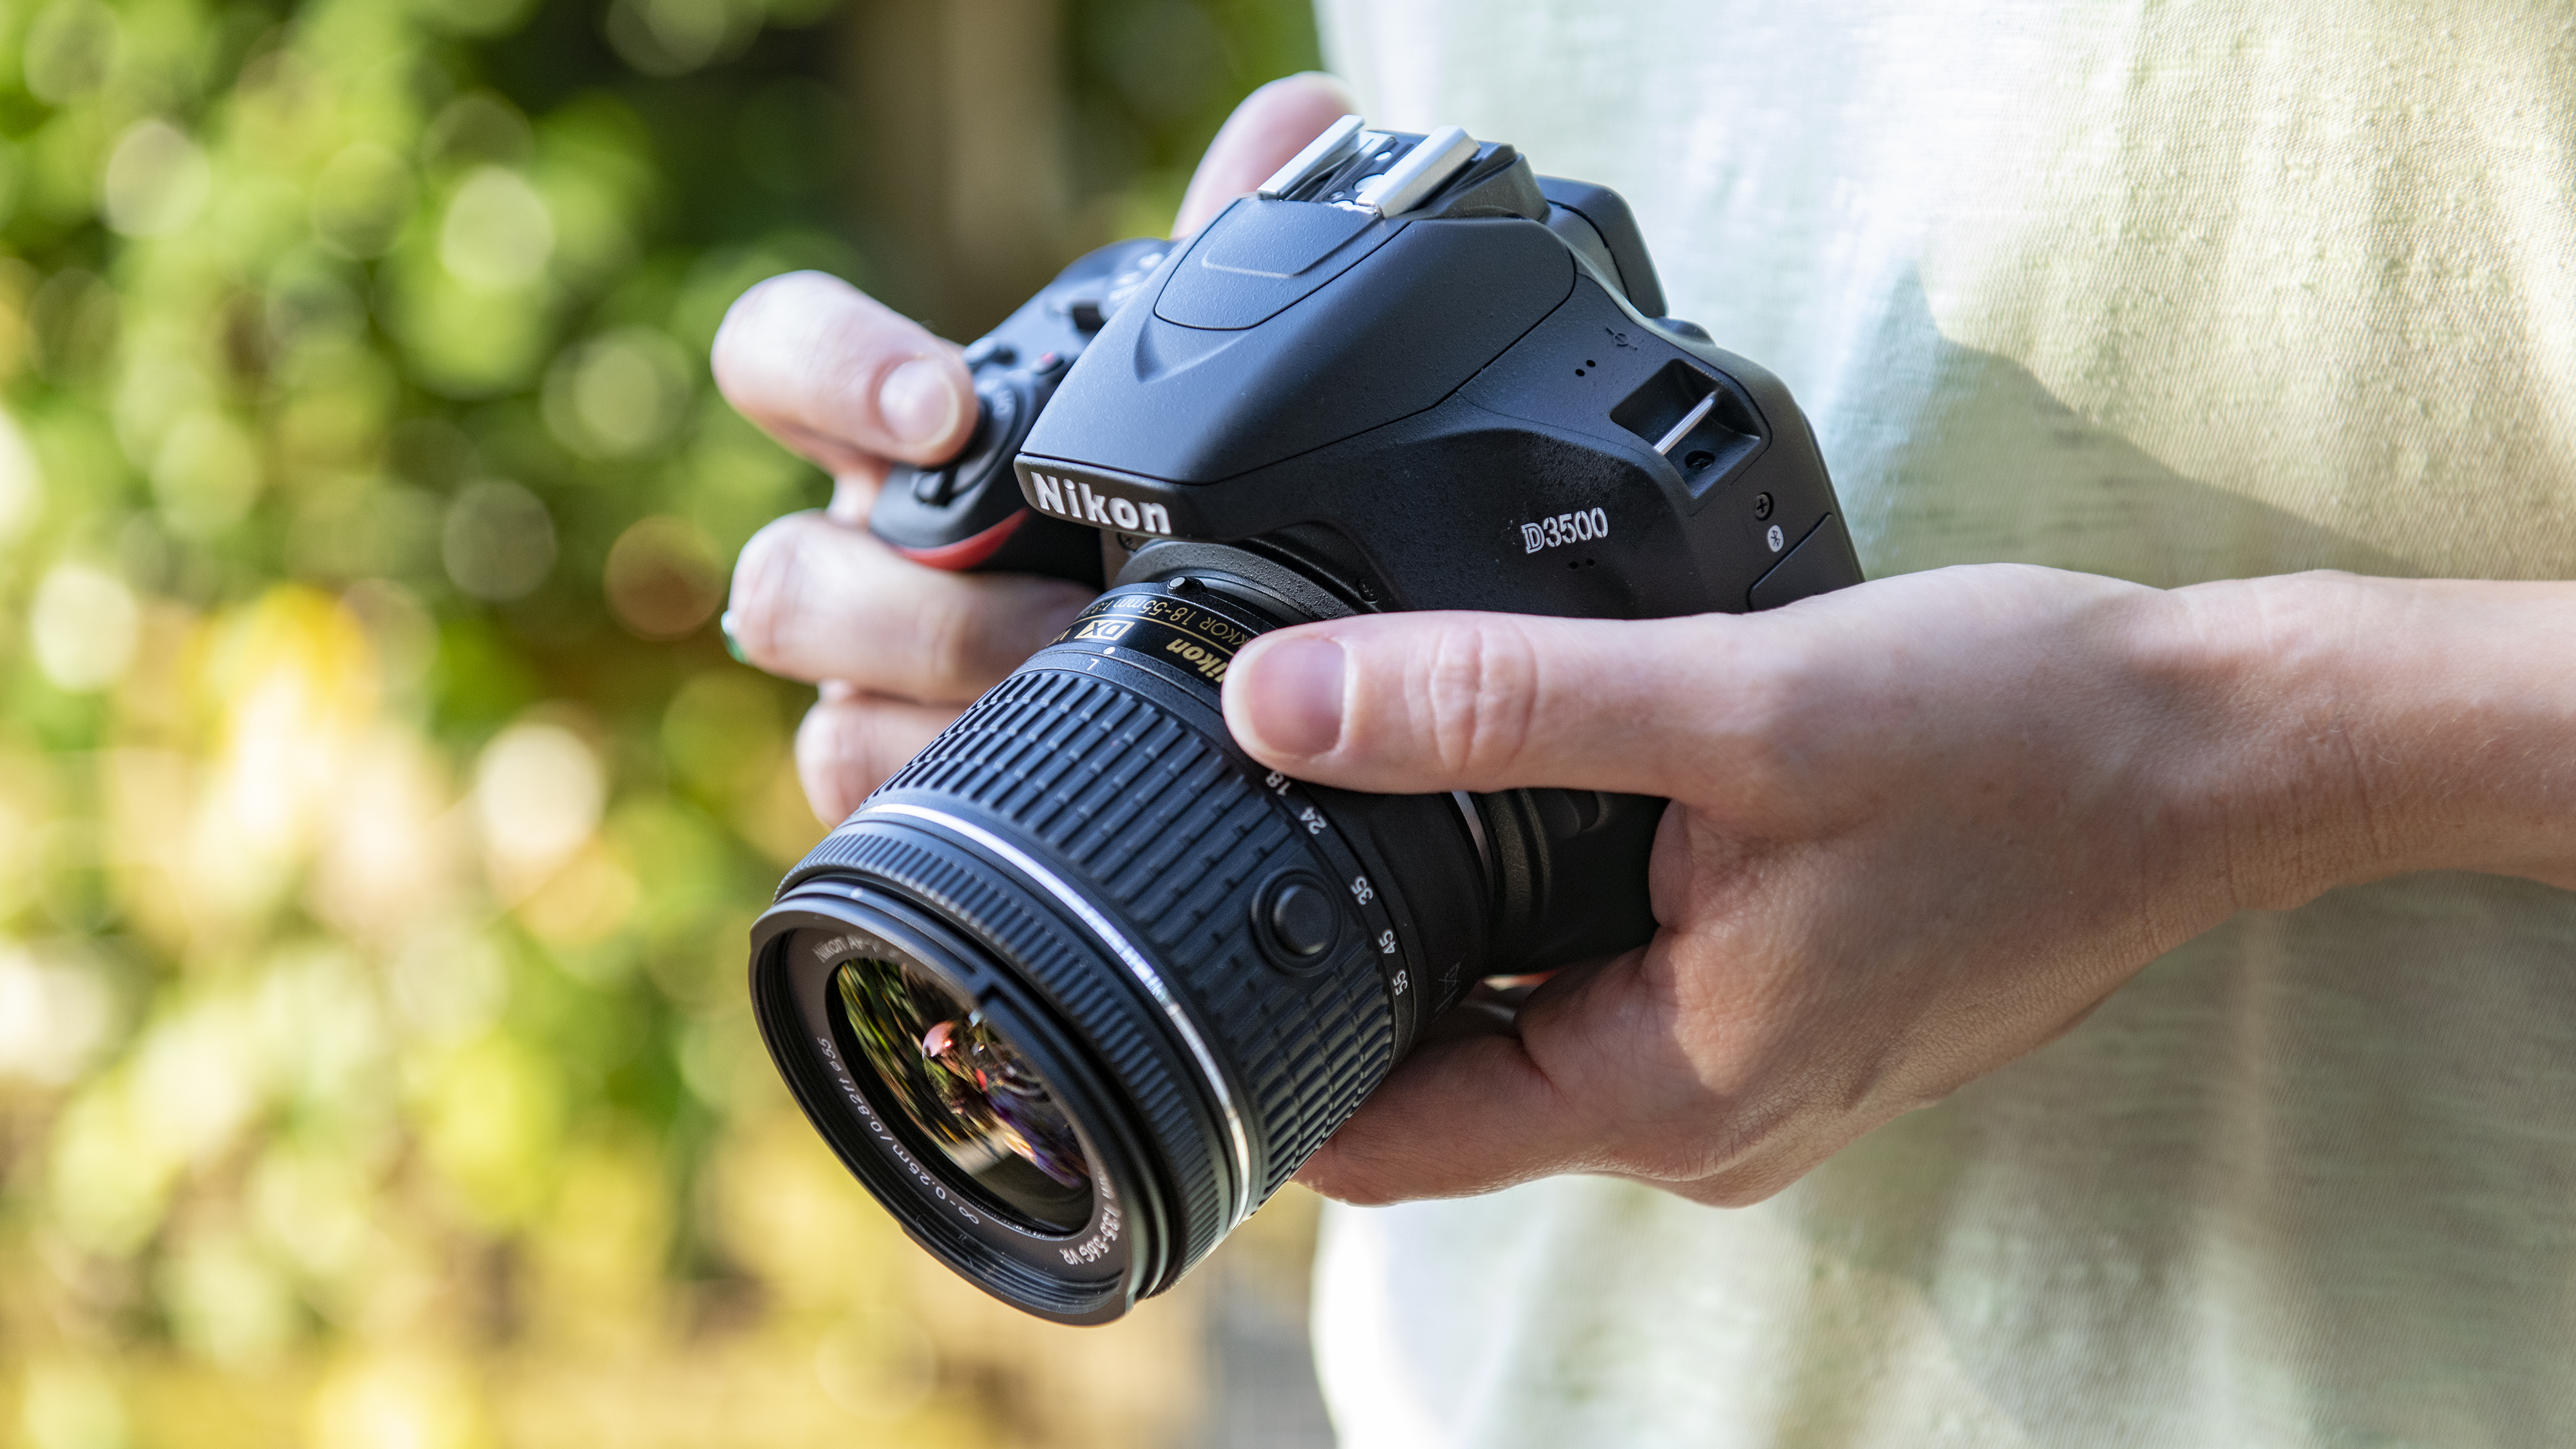 Mejores cámaras fotográficas profesionales: Nikon D3500